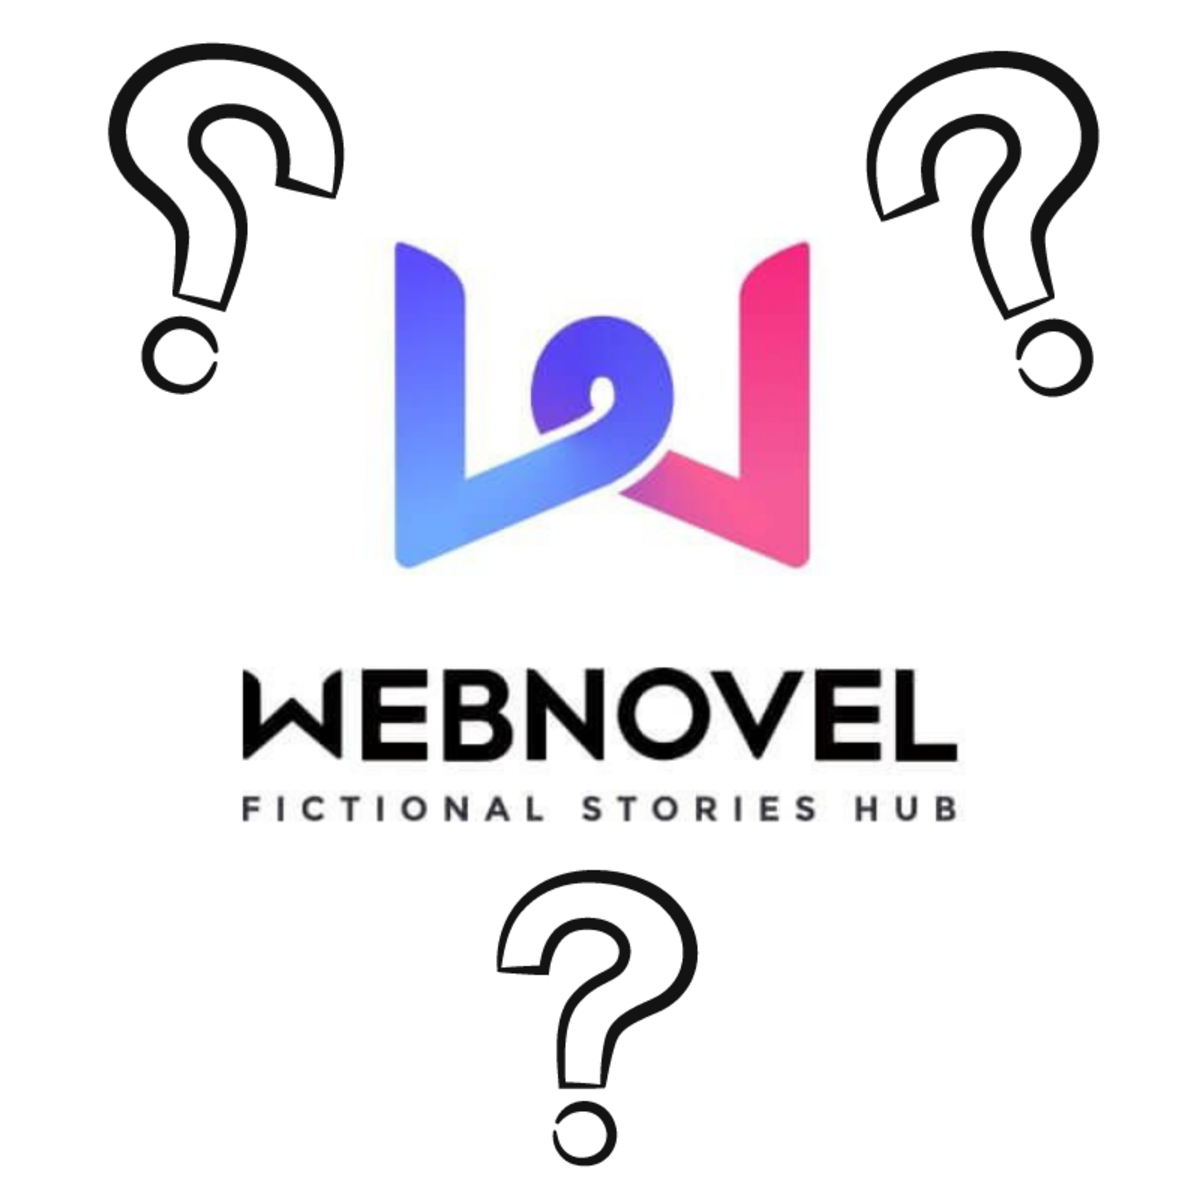 Webnovel: Is It a Legit Author Platform?